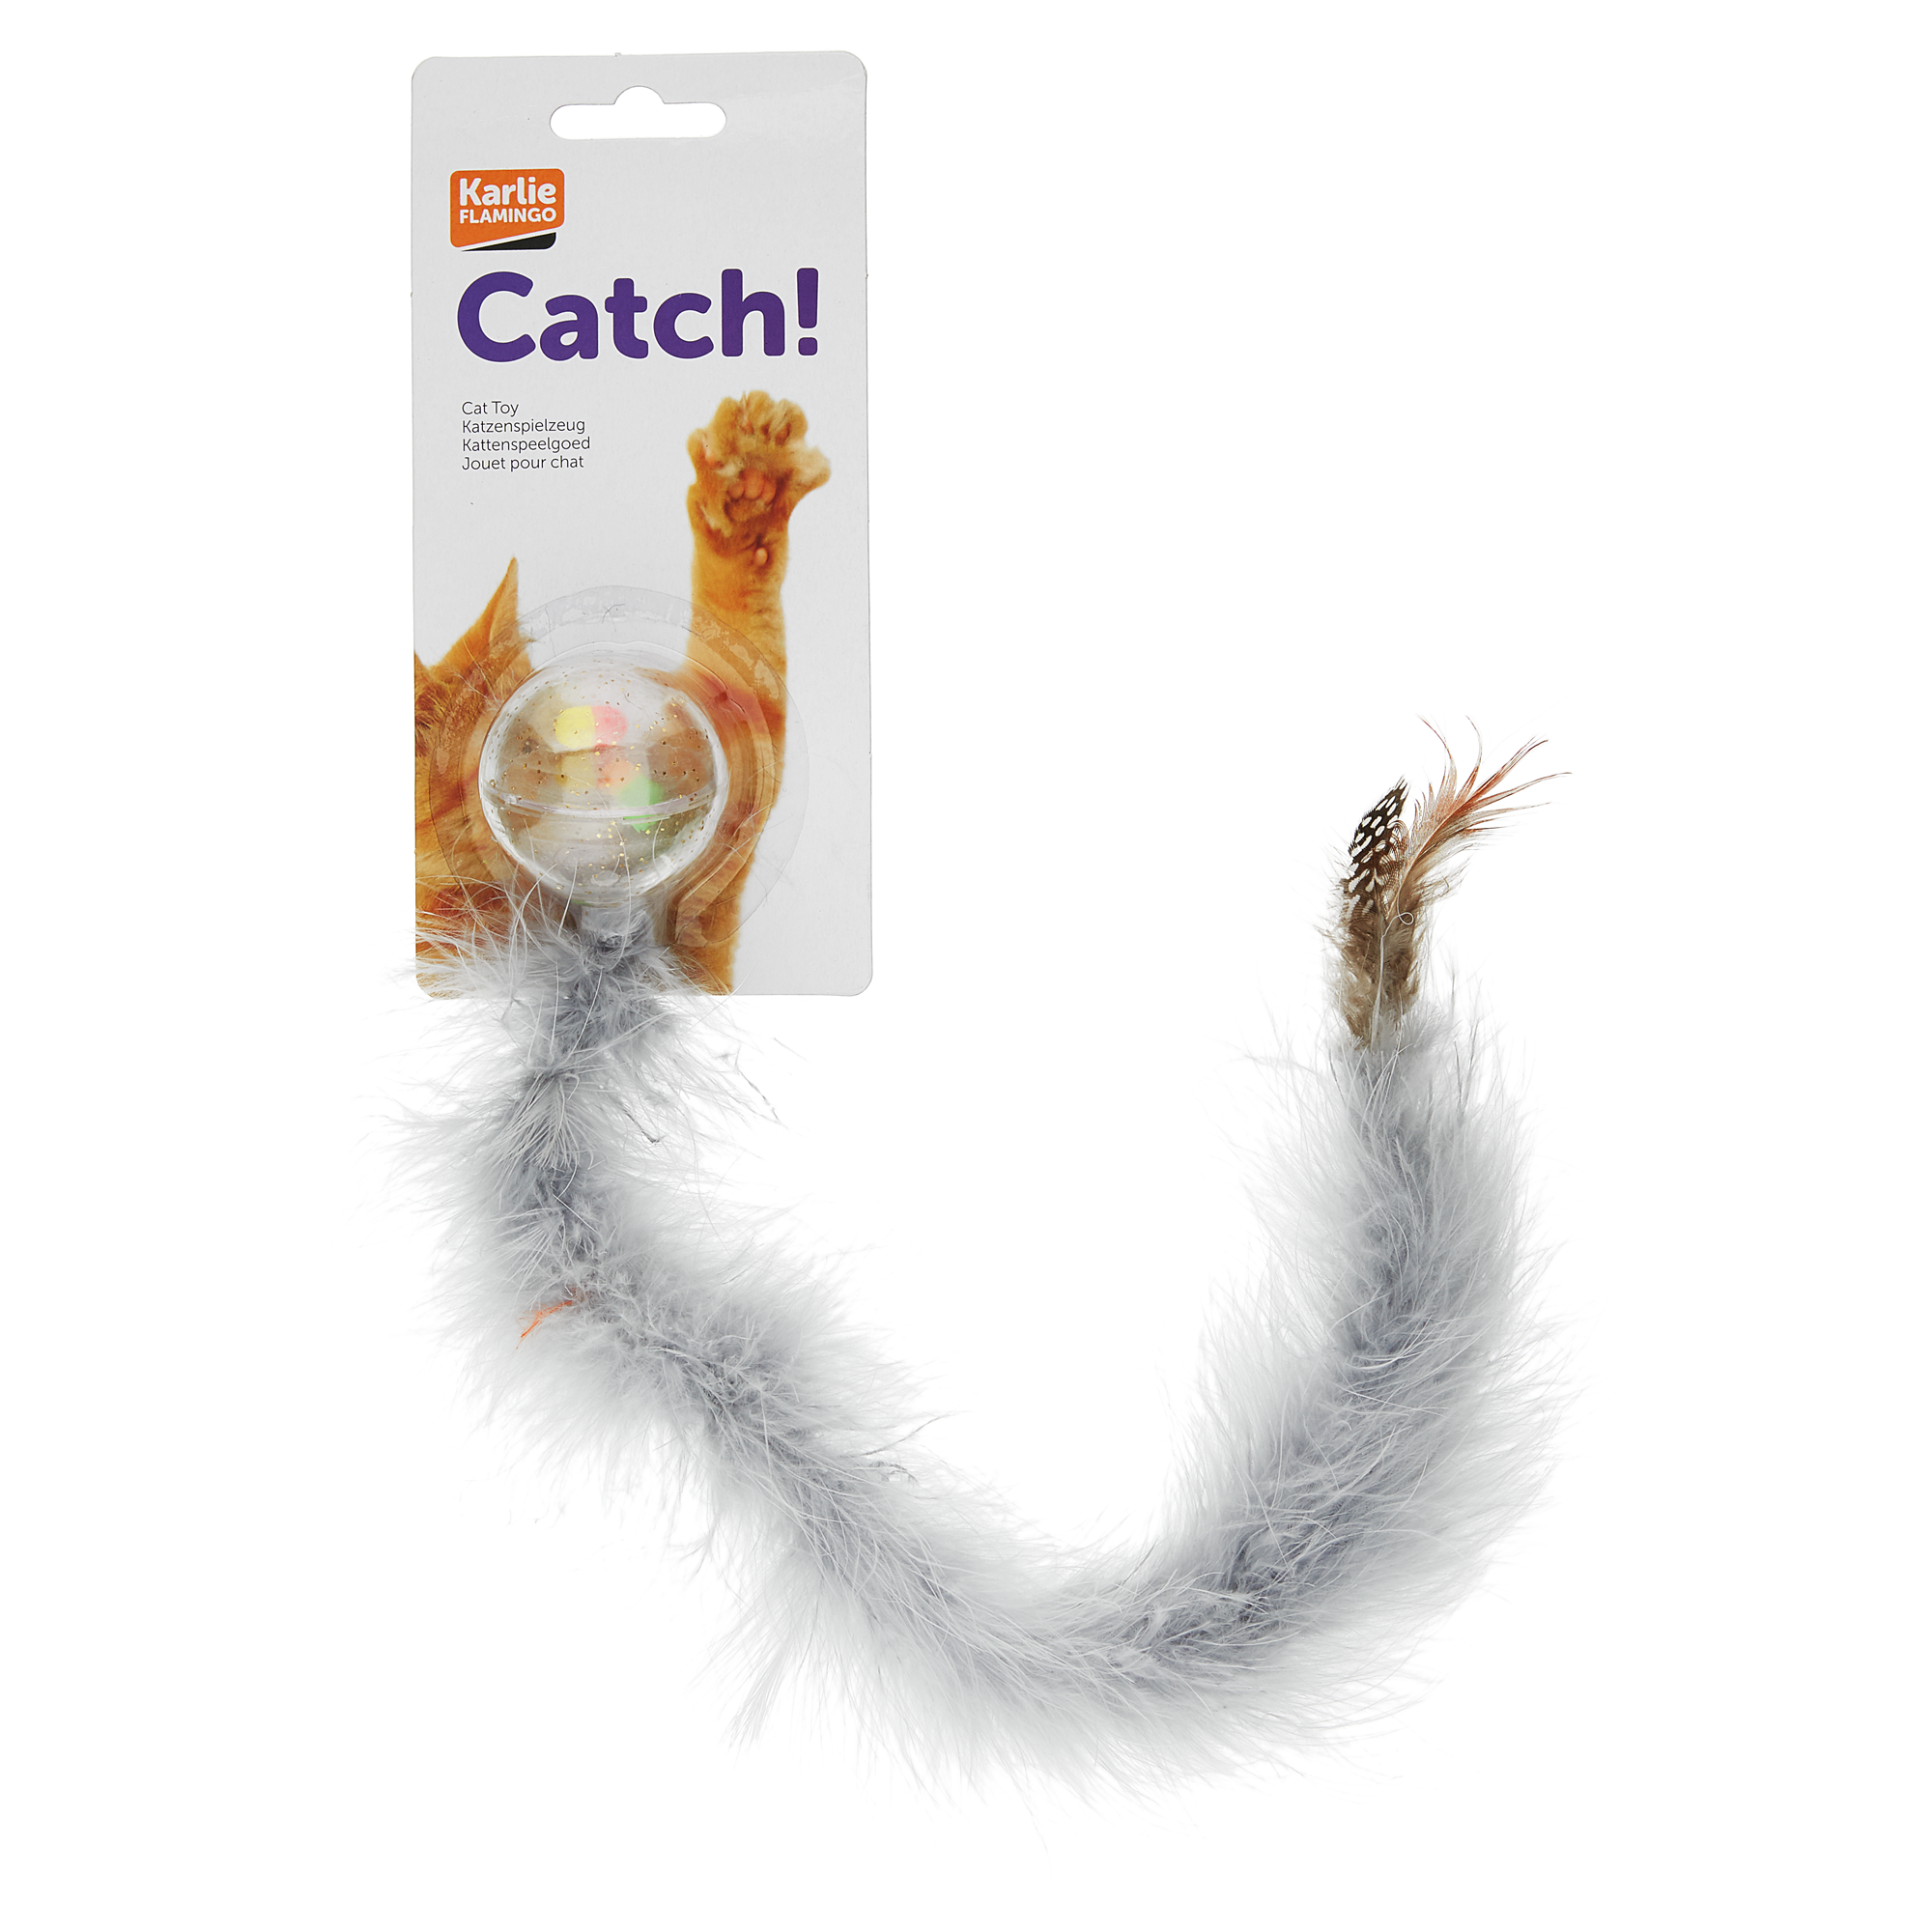 Katzenspielzeug "Catch!" Kunststoff grau 45 cm + product picture